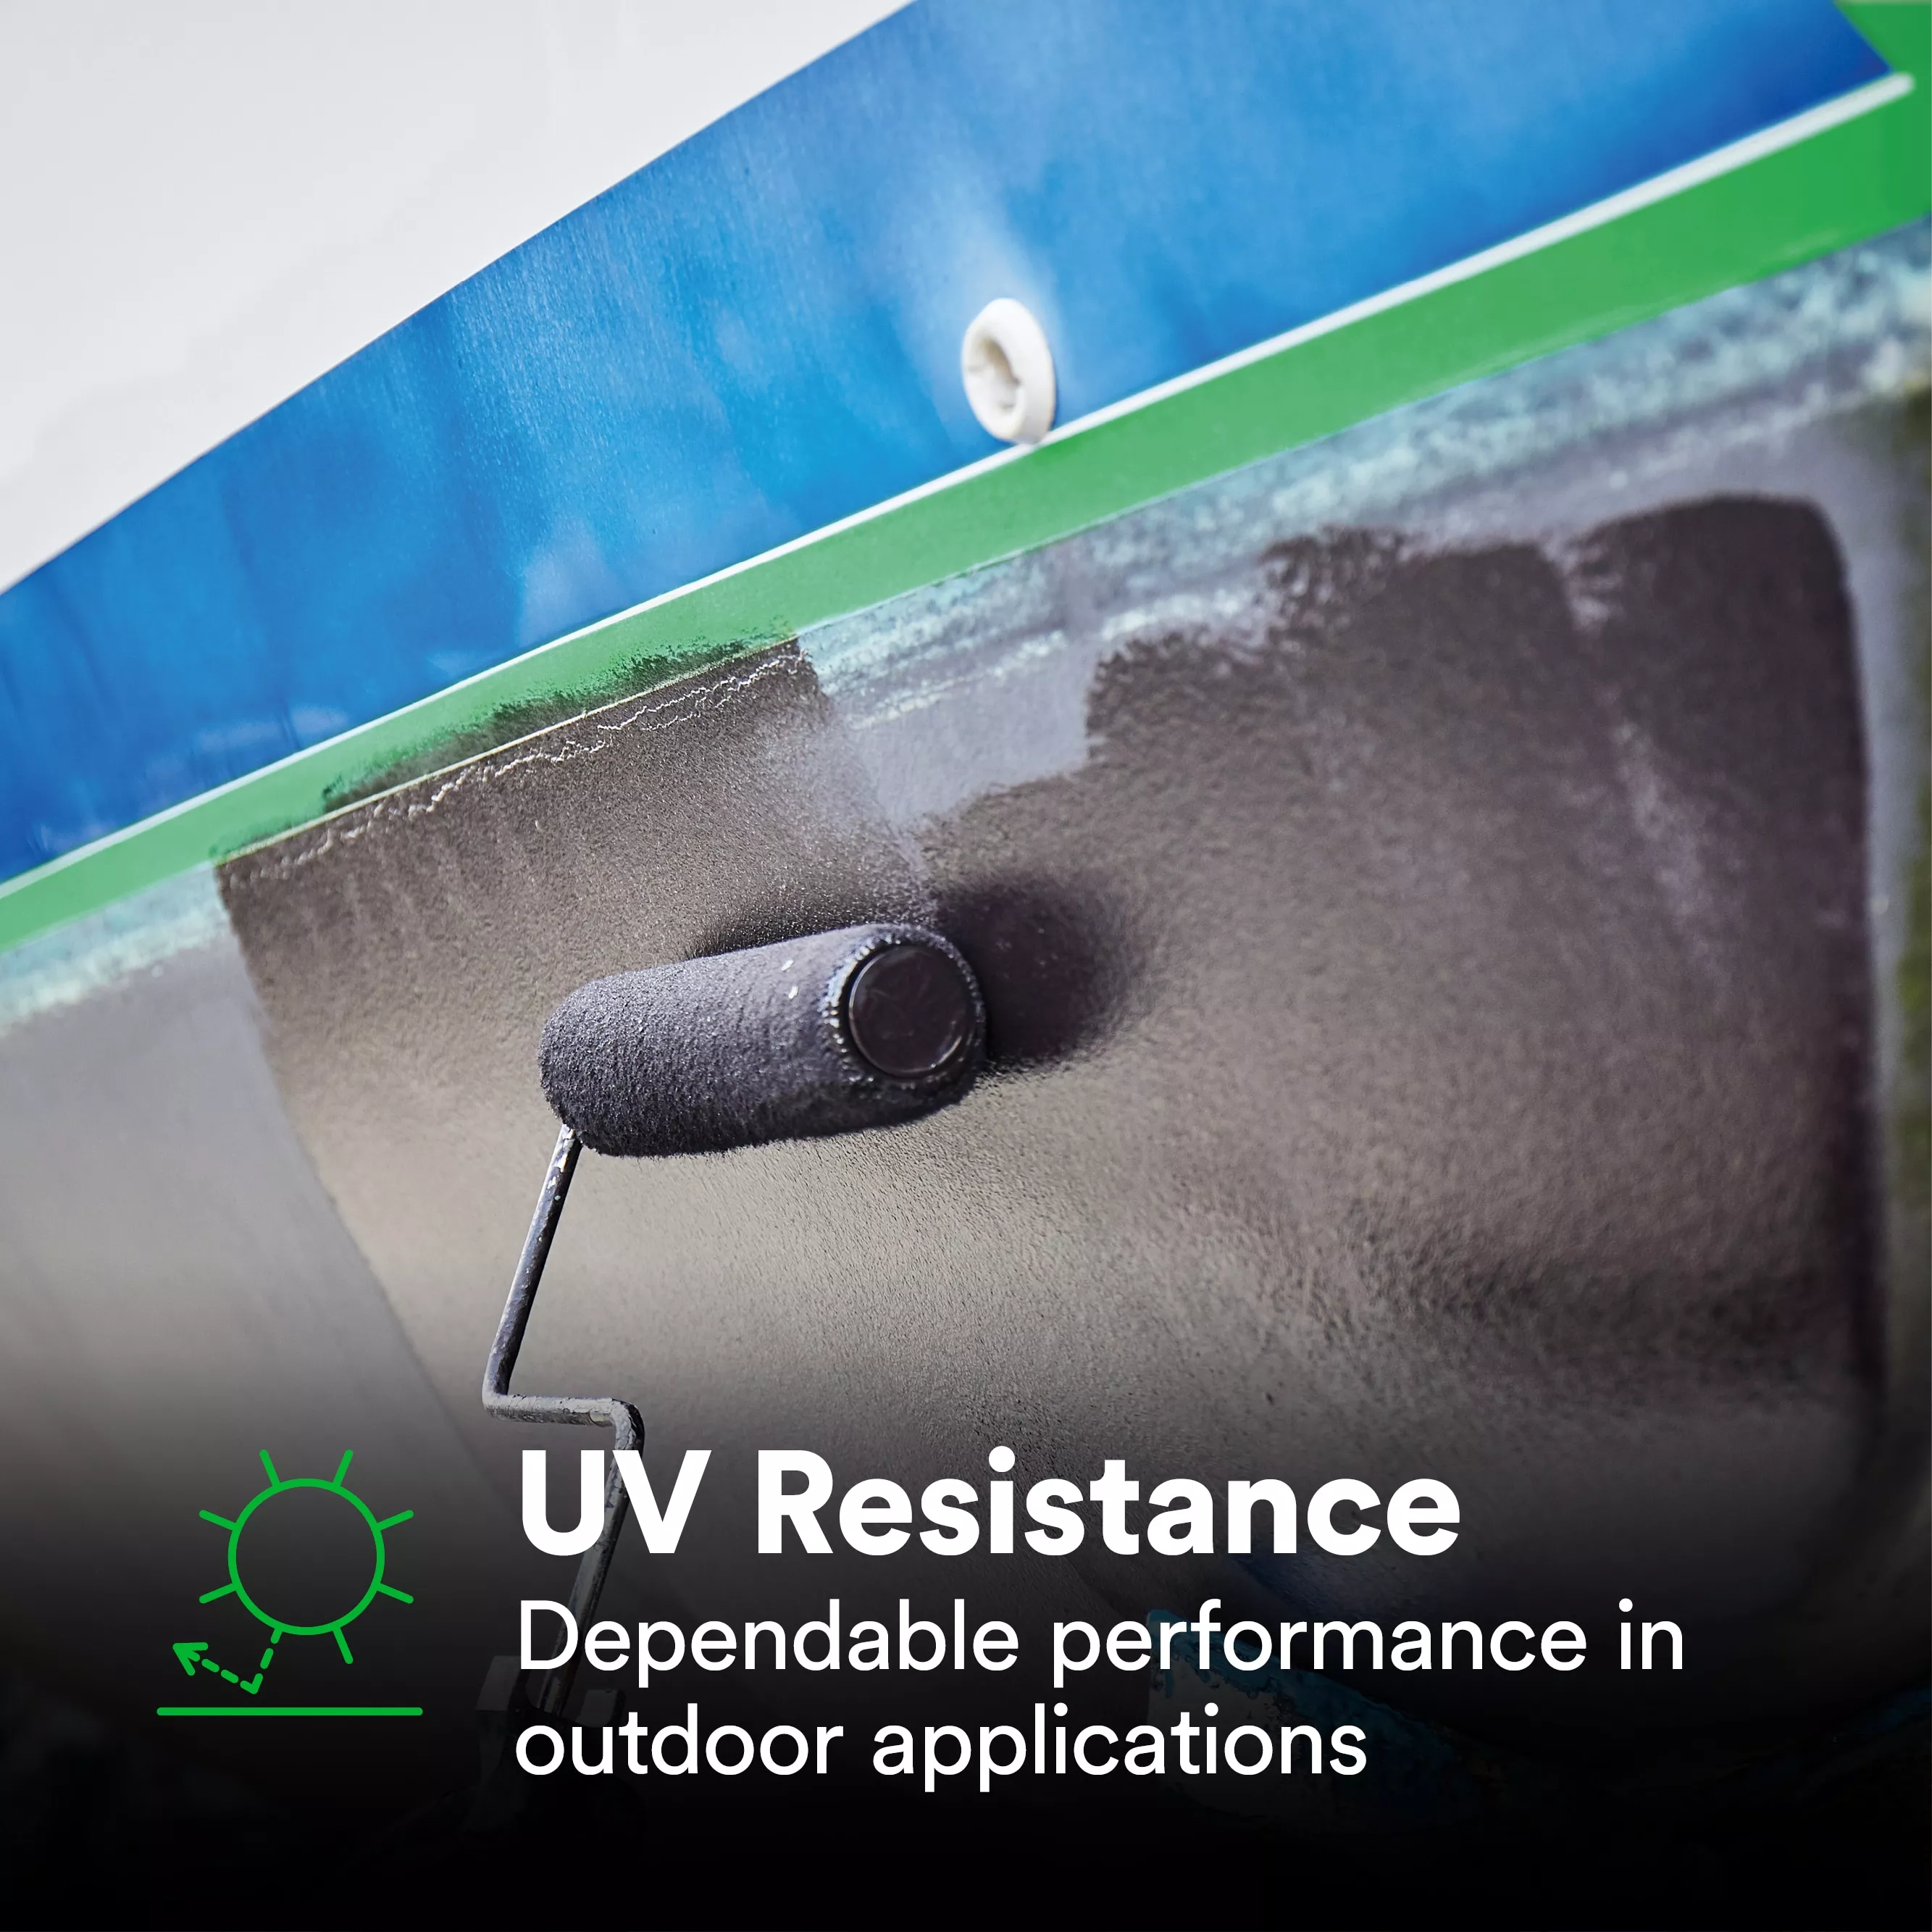 SKU 7100299471 | 3M™ UV Resistant Green Masking Tape